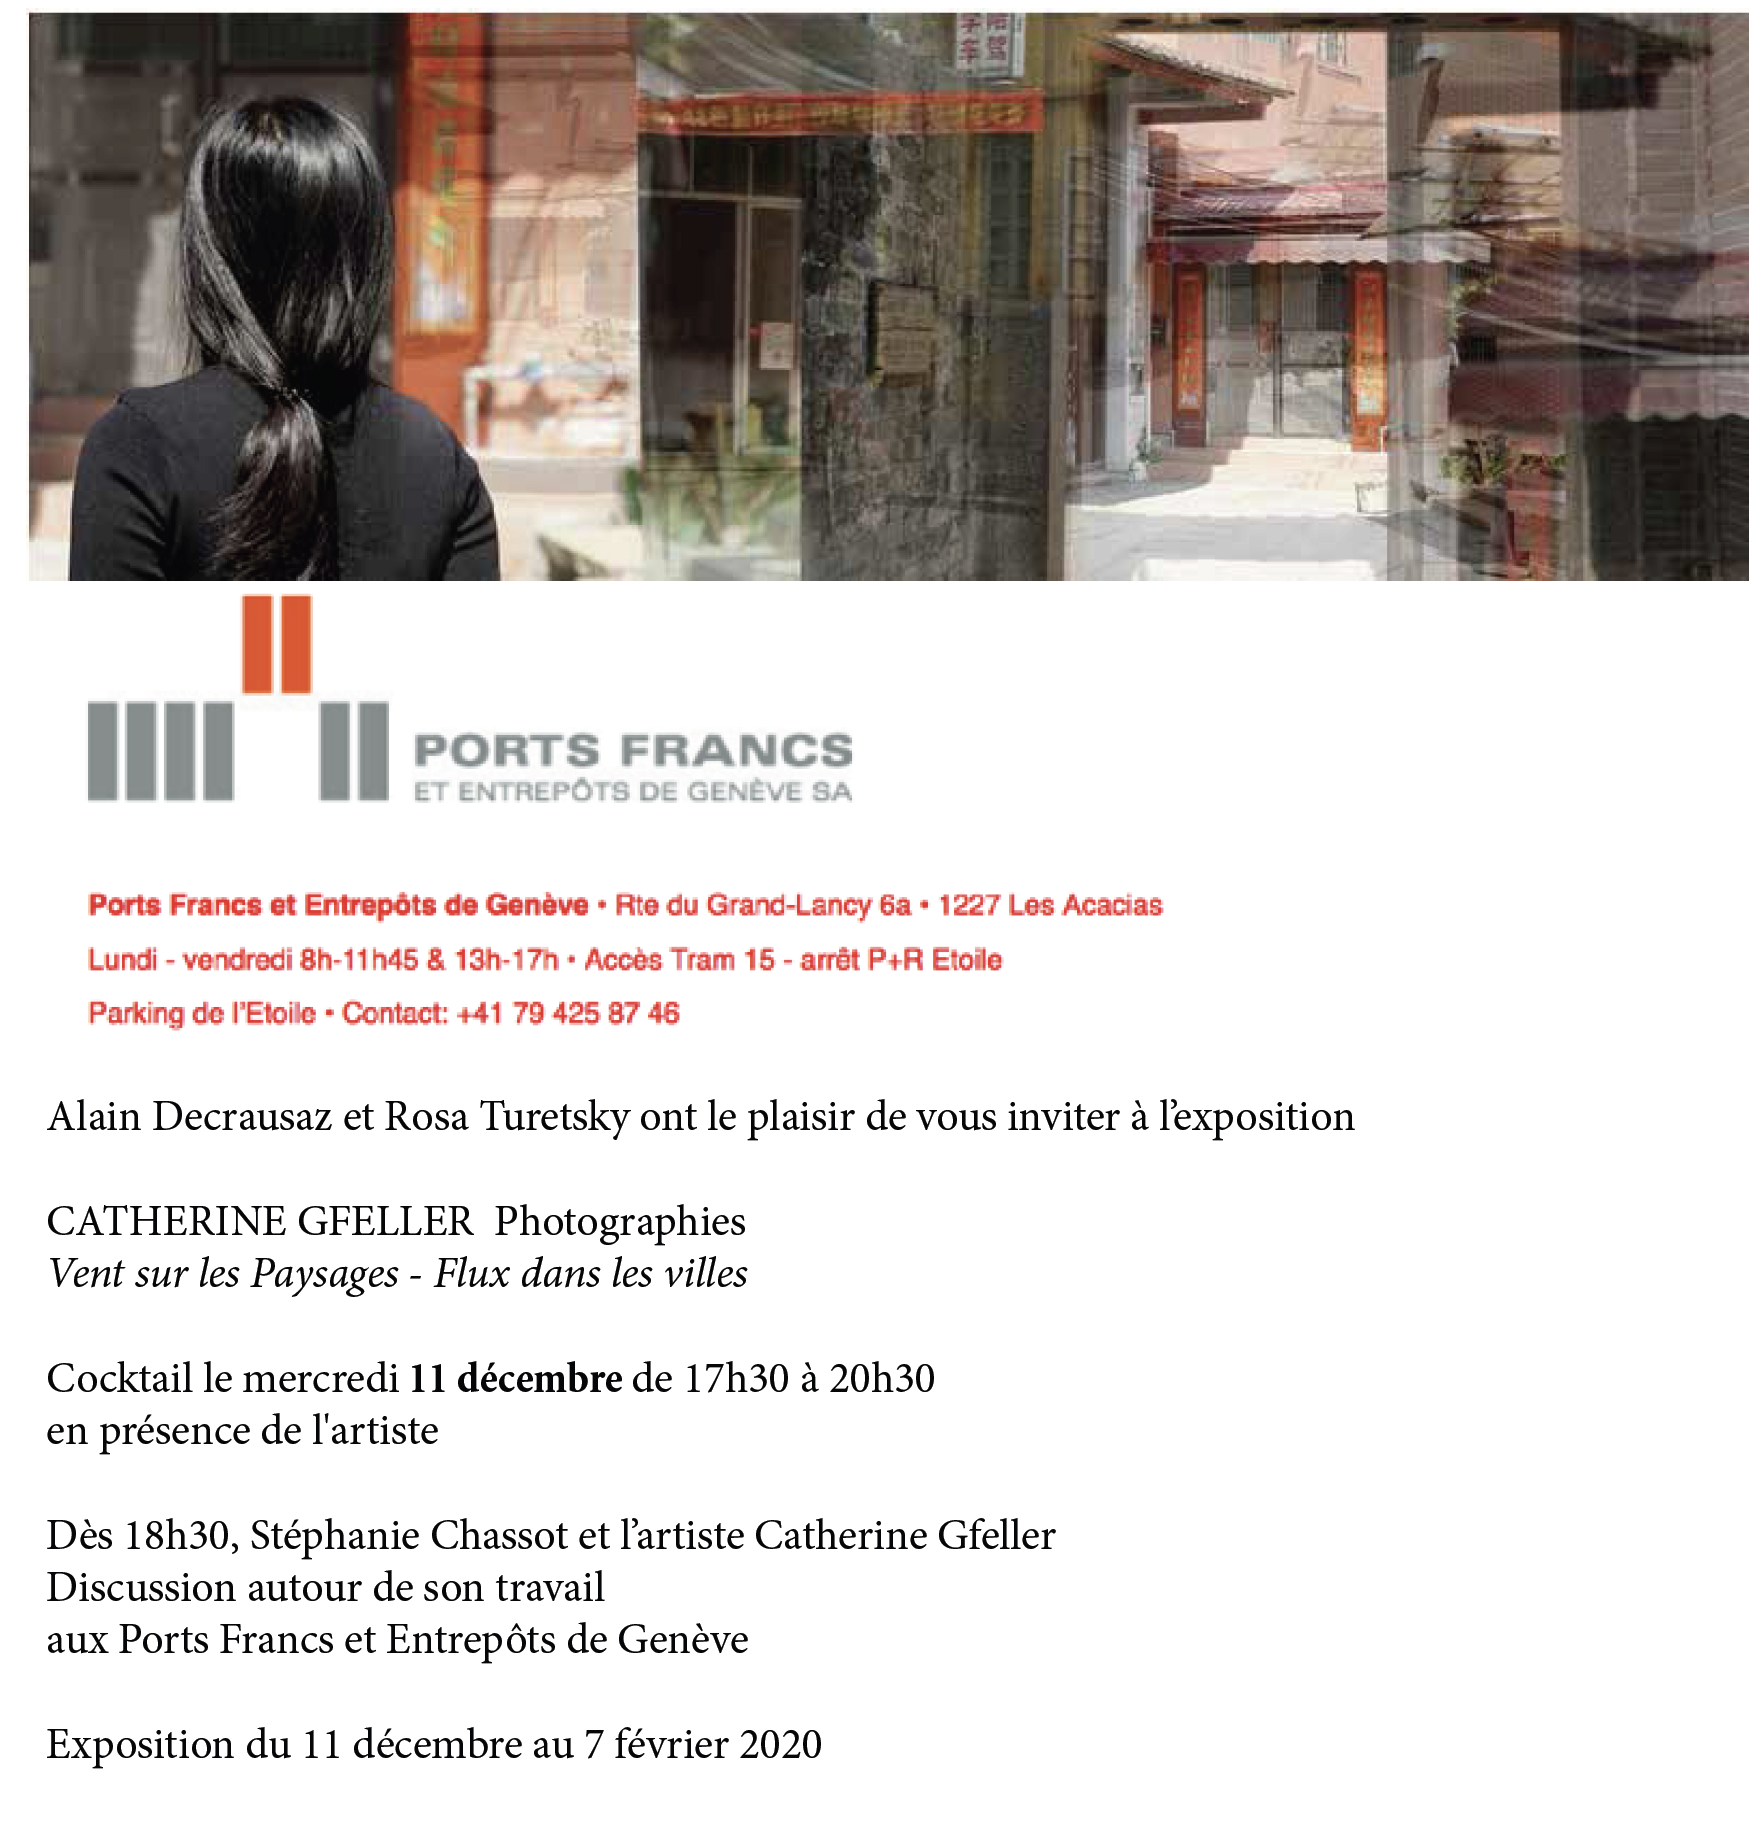 Ports Francs, 11.12.2019 - 7.02.2020, Genève